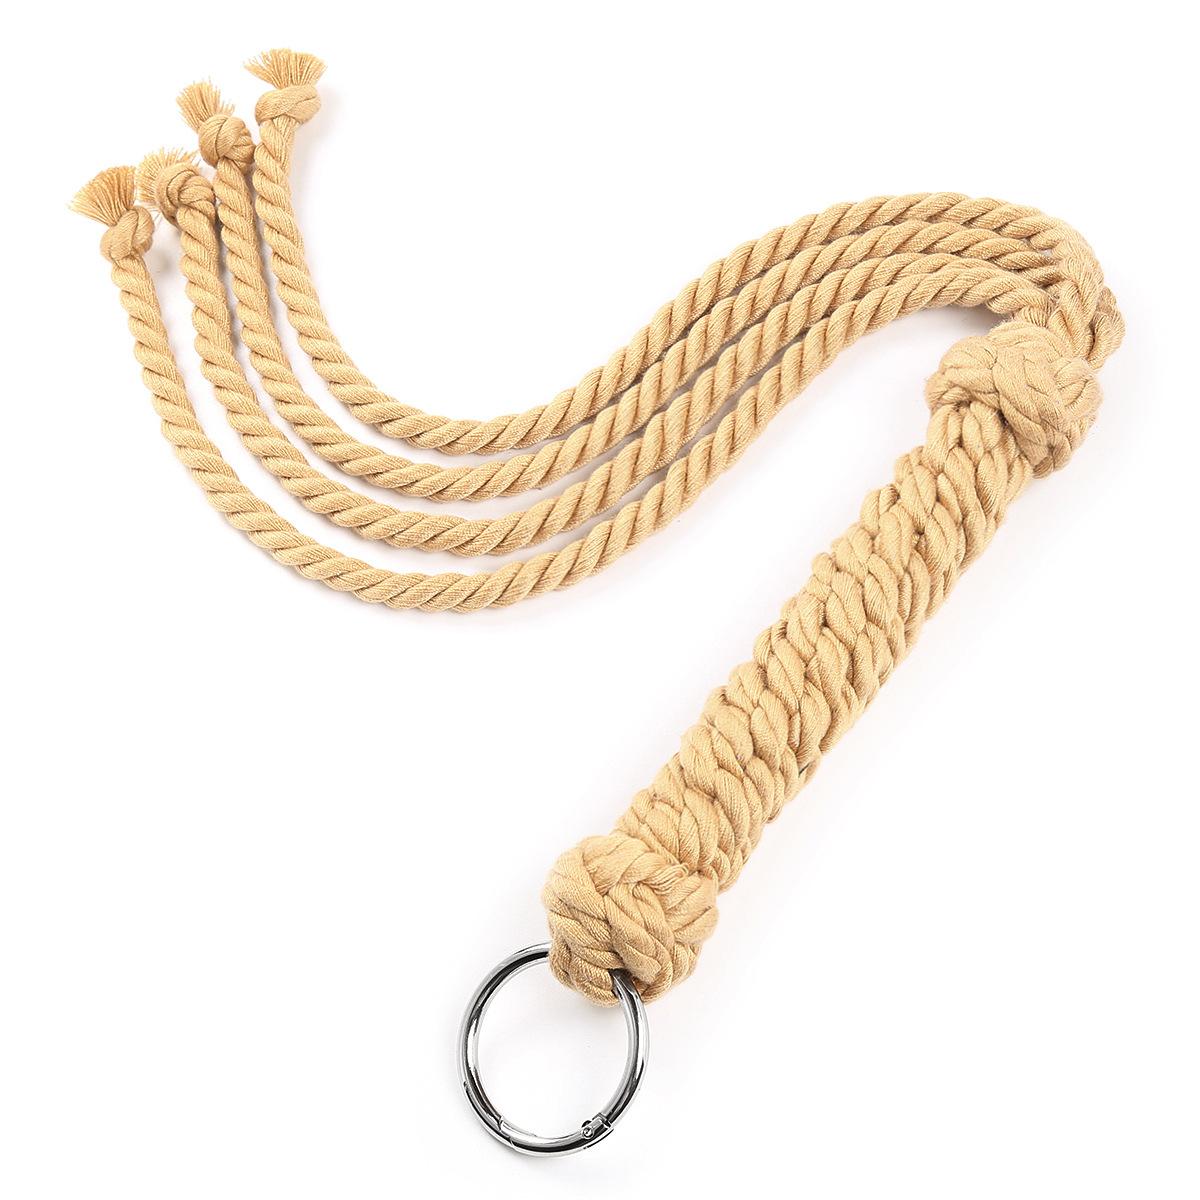 Iron ring whip Manual weaving, tassels, sex toys